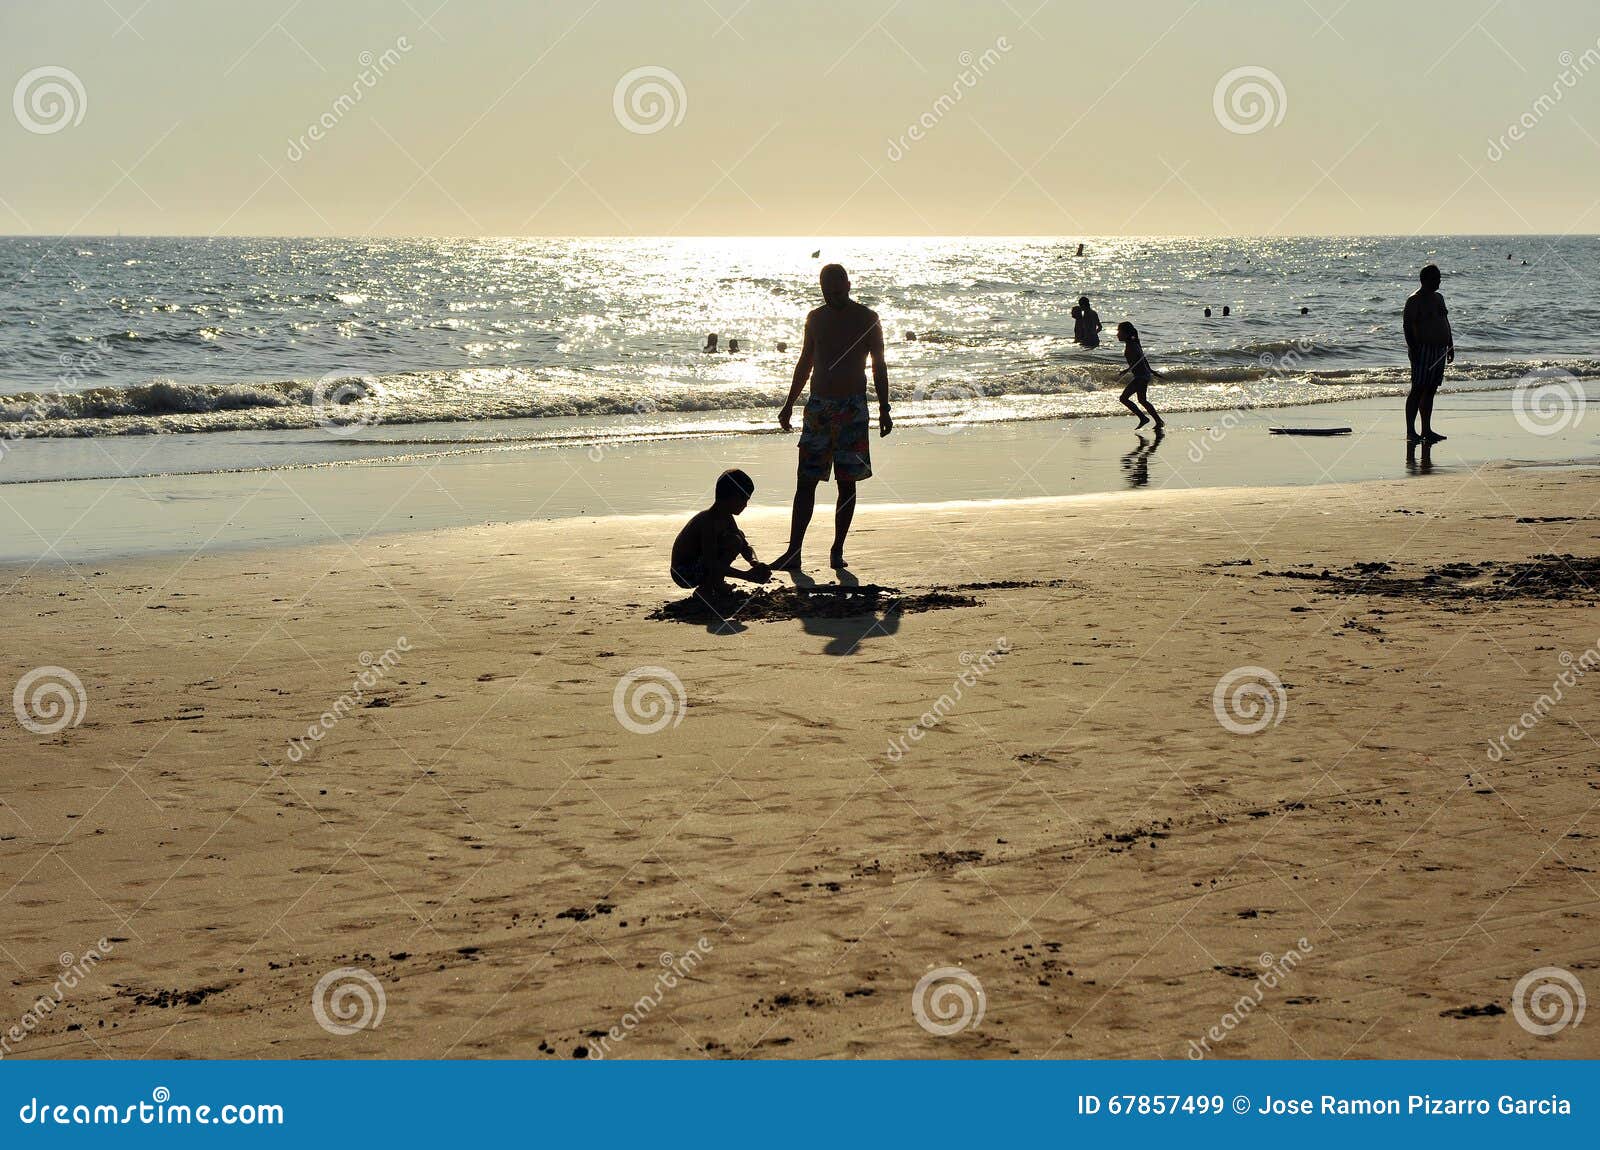 father and son on the costa ballena beach, cadiz province, spain